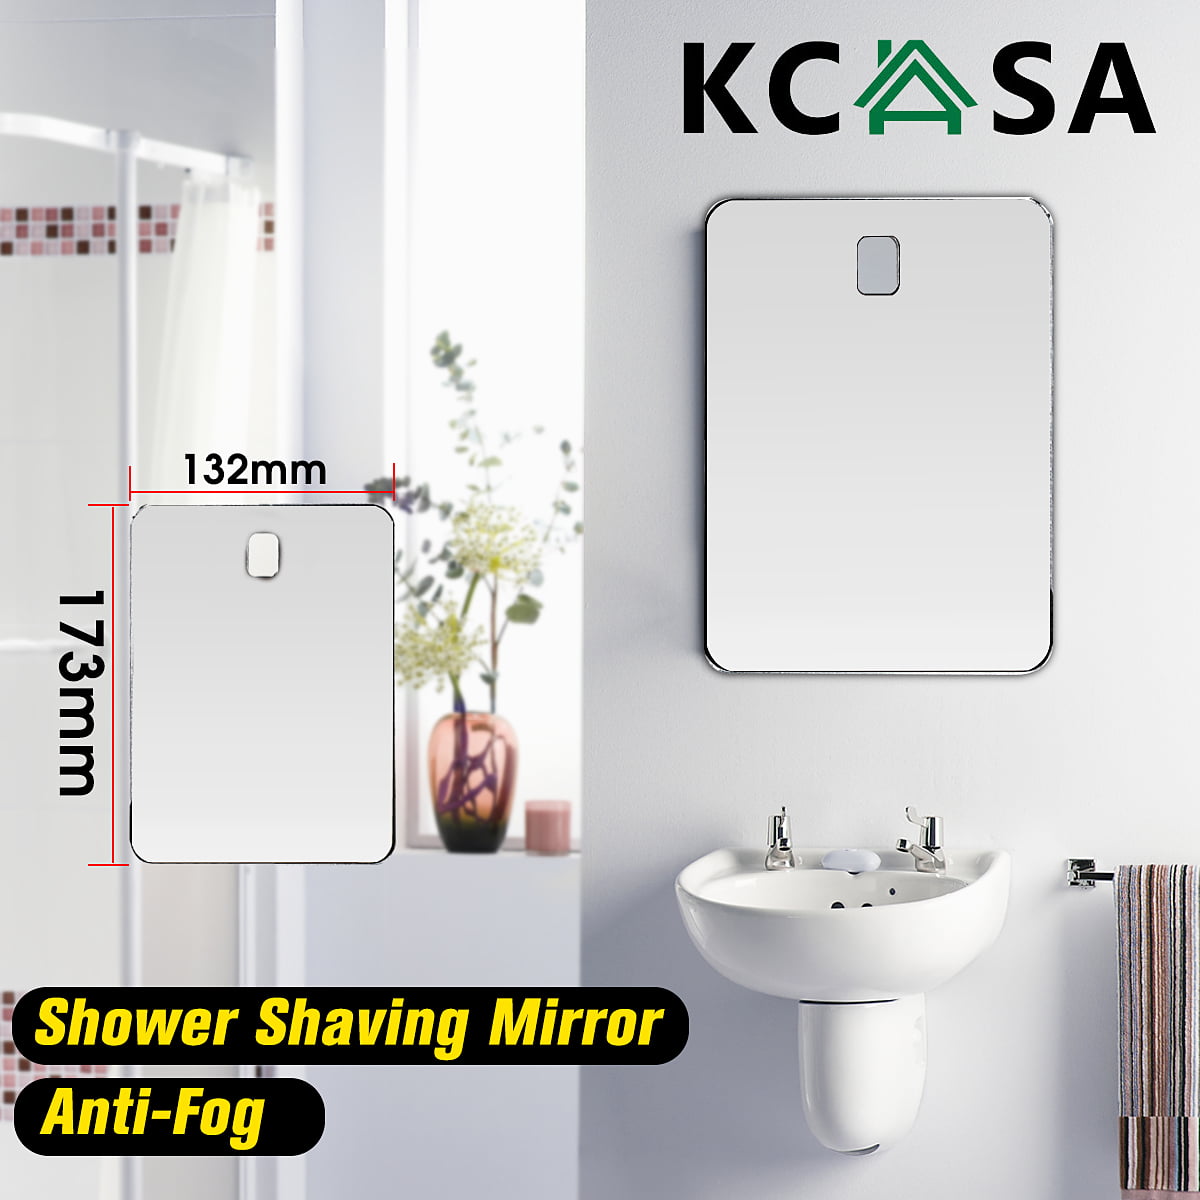 KCASA Fogless Shaving Shower Mirror Bathroom Anti-Fog Wall Suction Mount Hook 